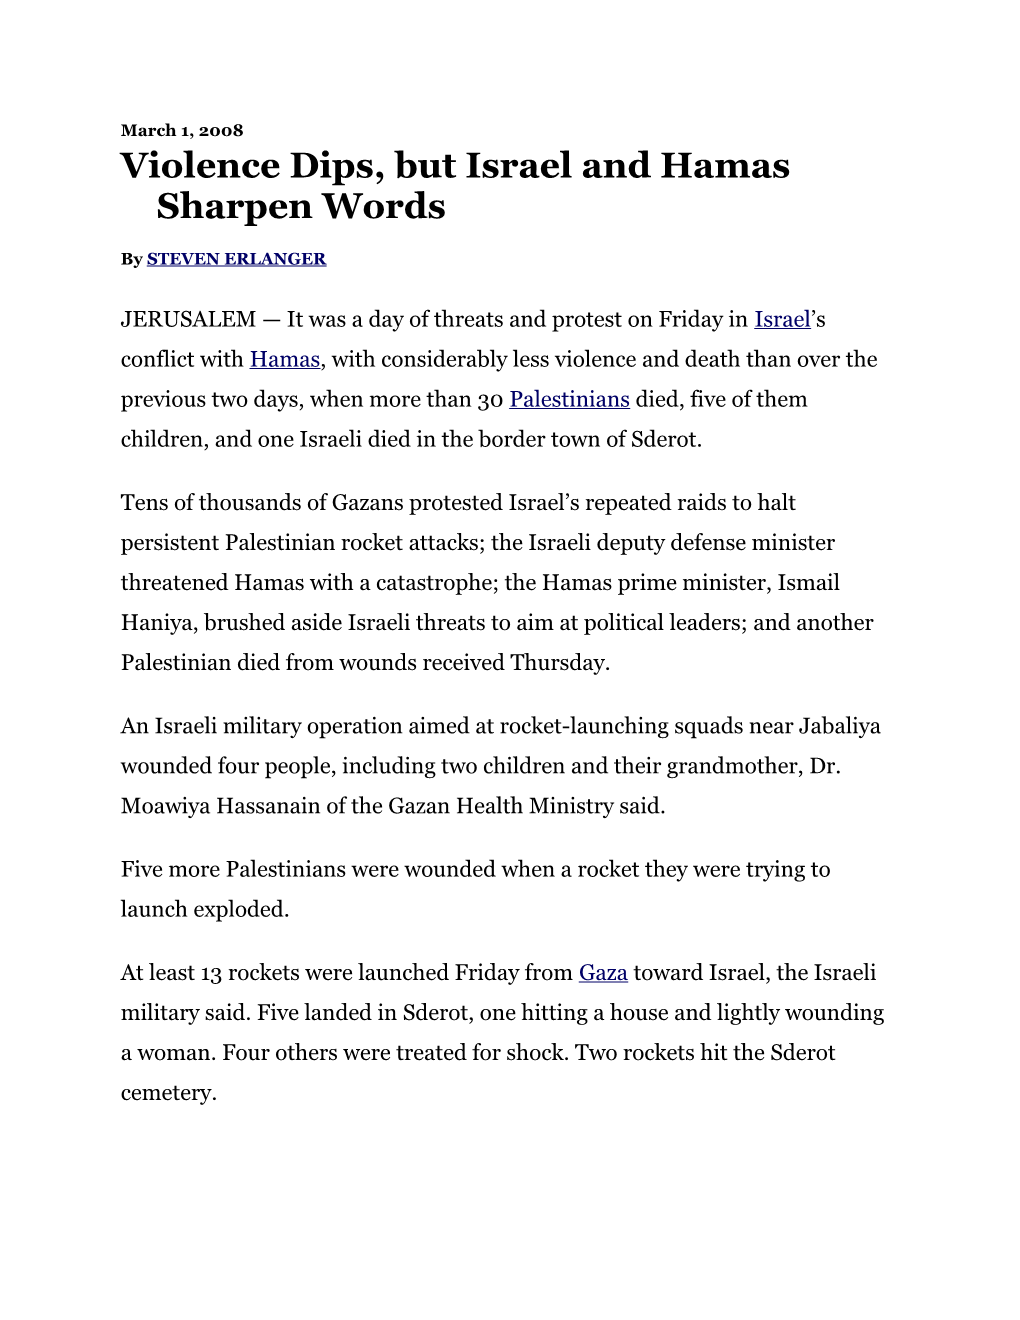 Violence Dips, but Israel and Hamas Sharpen Words